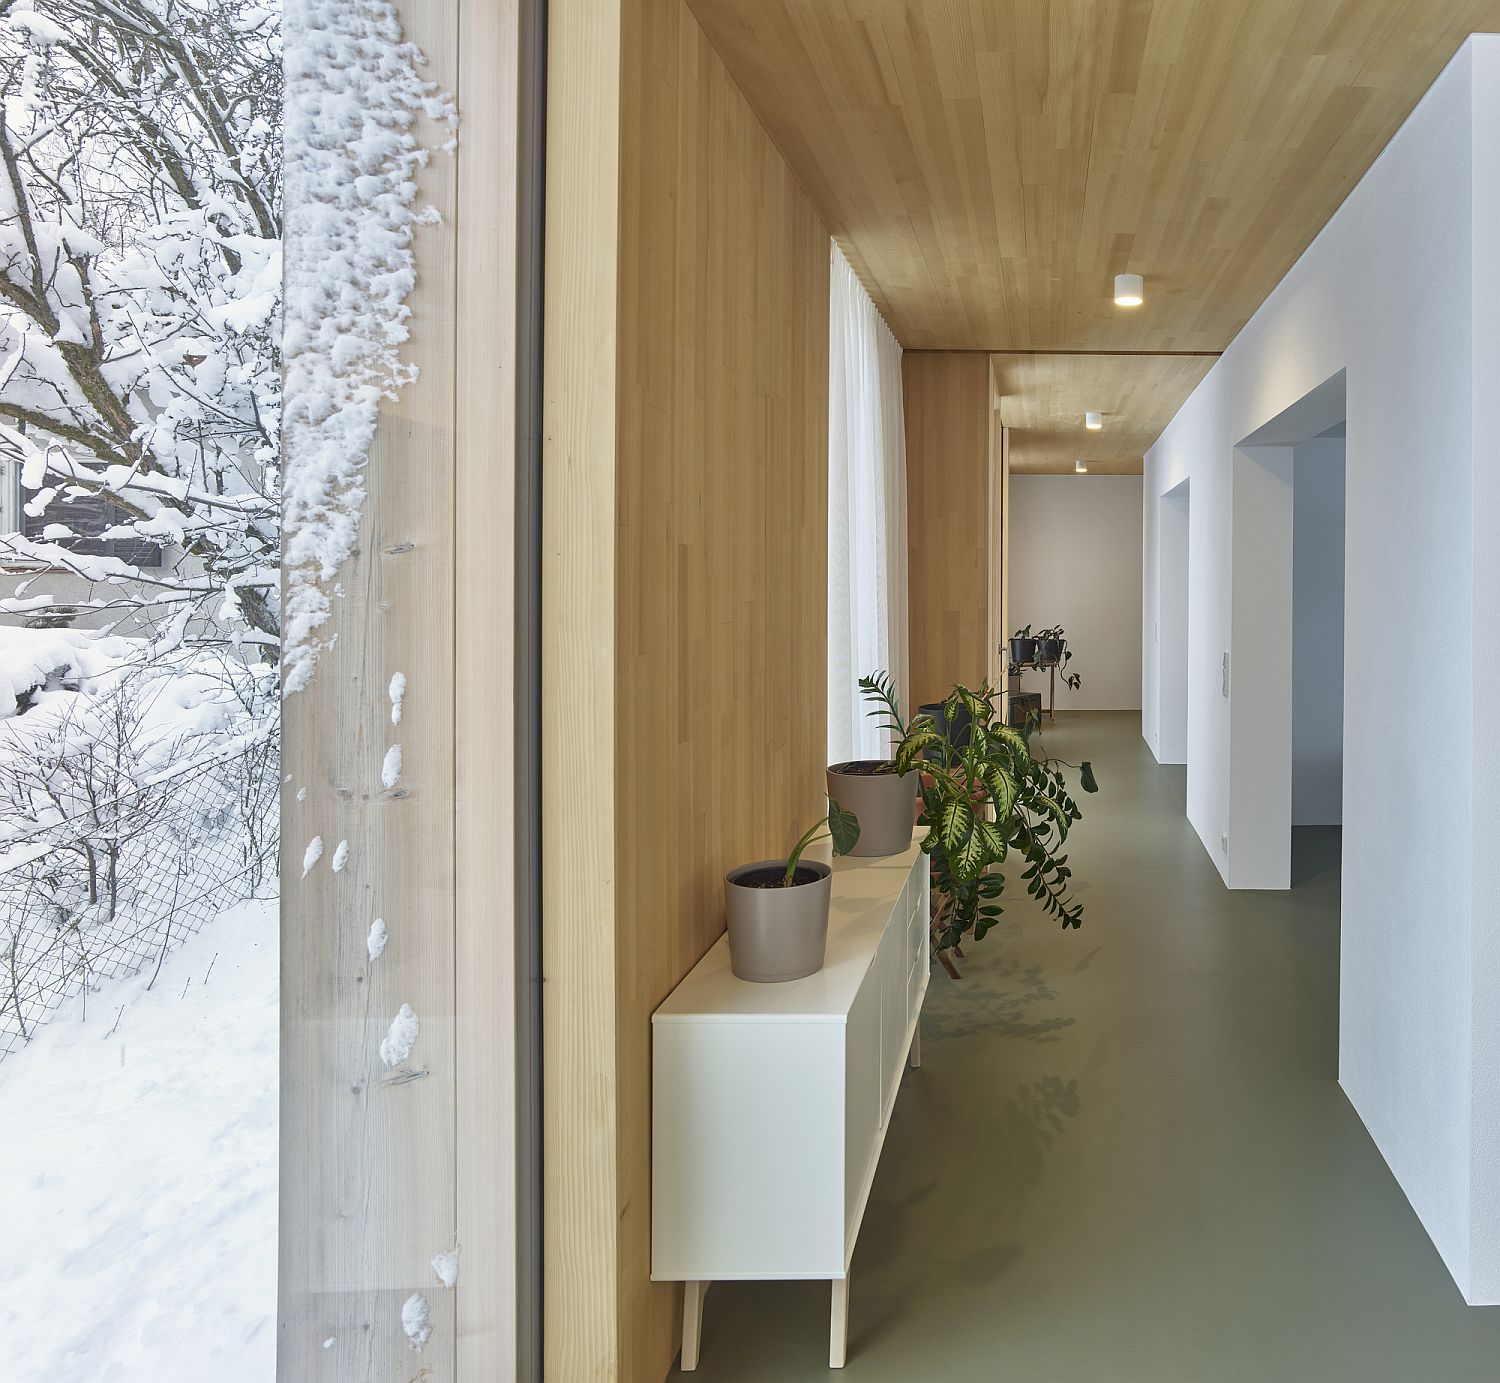 Wood-draped-walls-inside-the-house-make-a-cozy-visual-impact